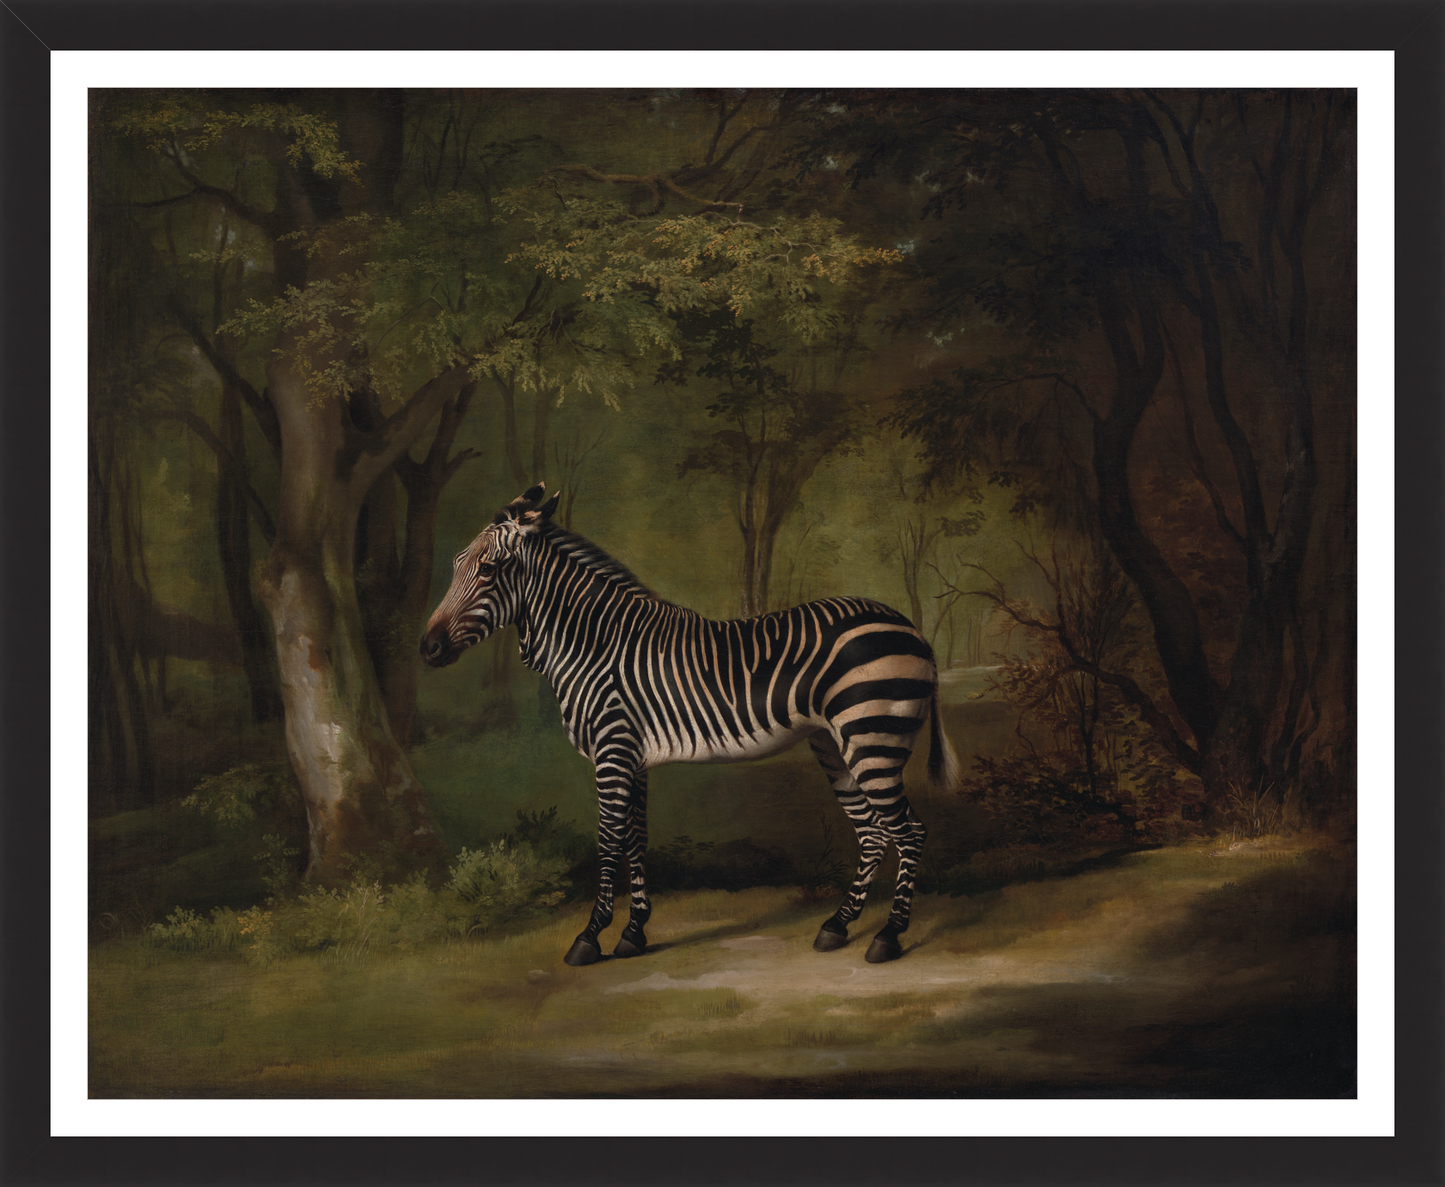 Zebra in Woods – Vintage Restored Print